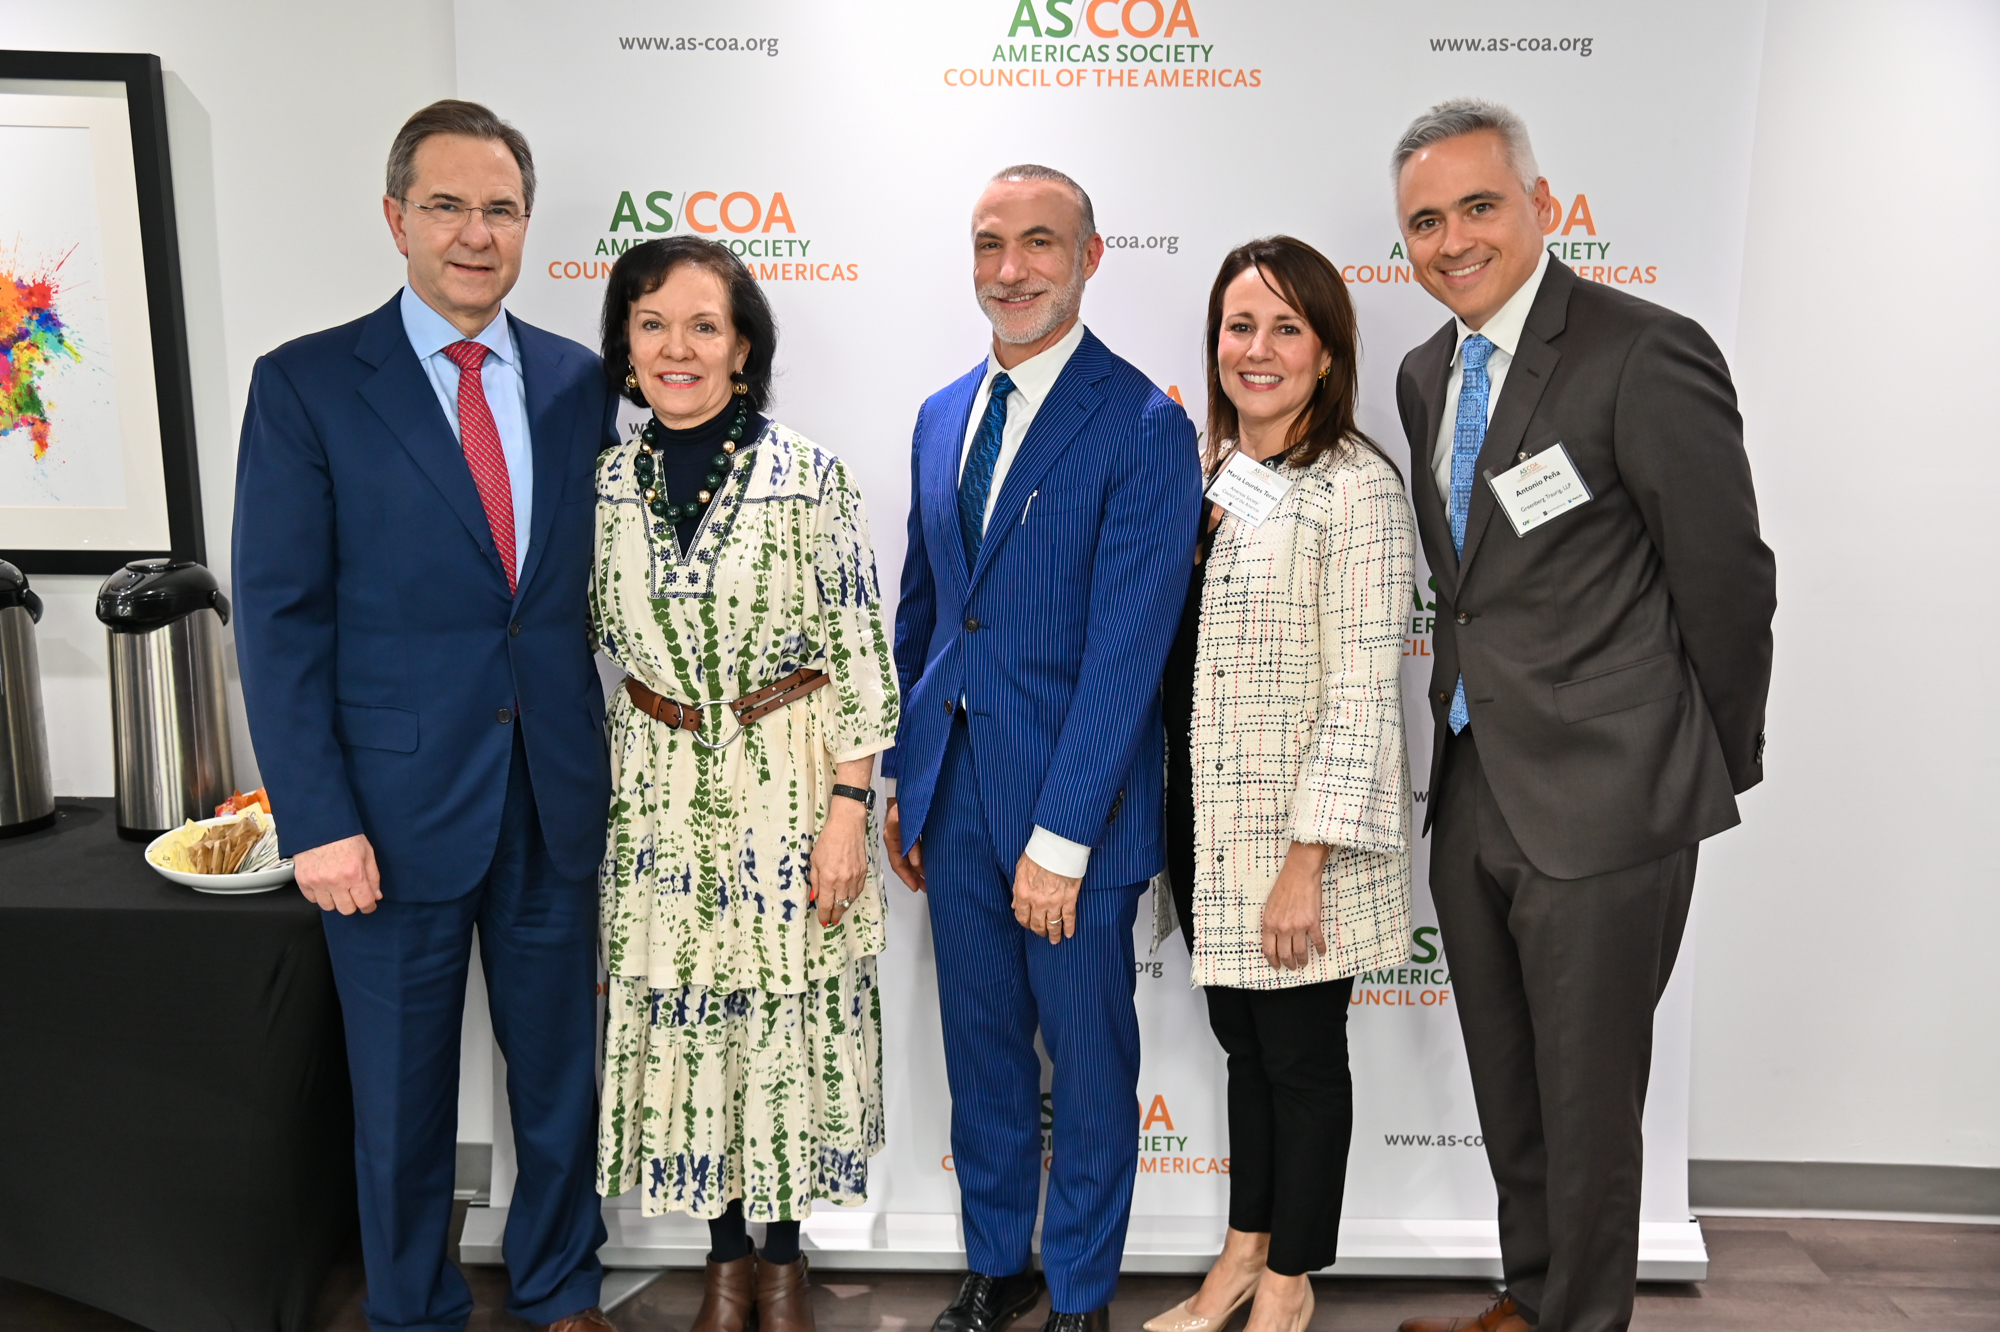 Ambassador Moctezuma & Spouse; Jonathan Chait, Consul General of Mexico in Miami; Maria L. Teran, AS/COA; Antonio Peña, Greenberg Traurig LLP